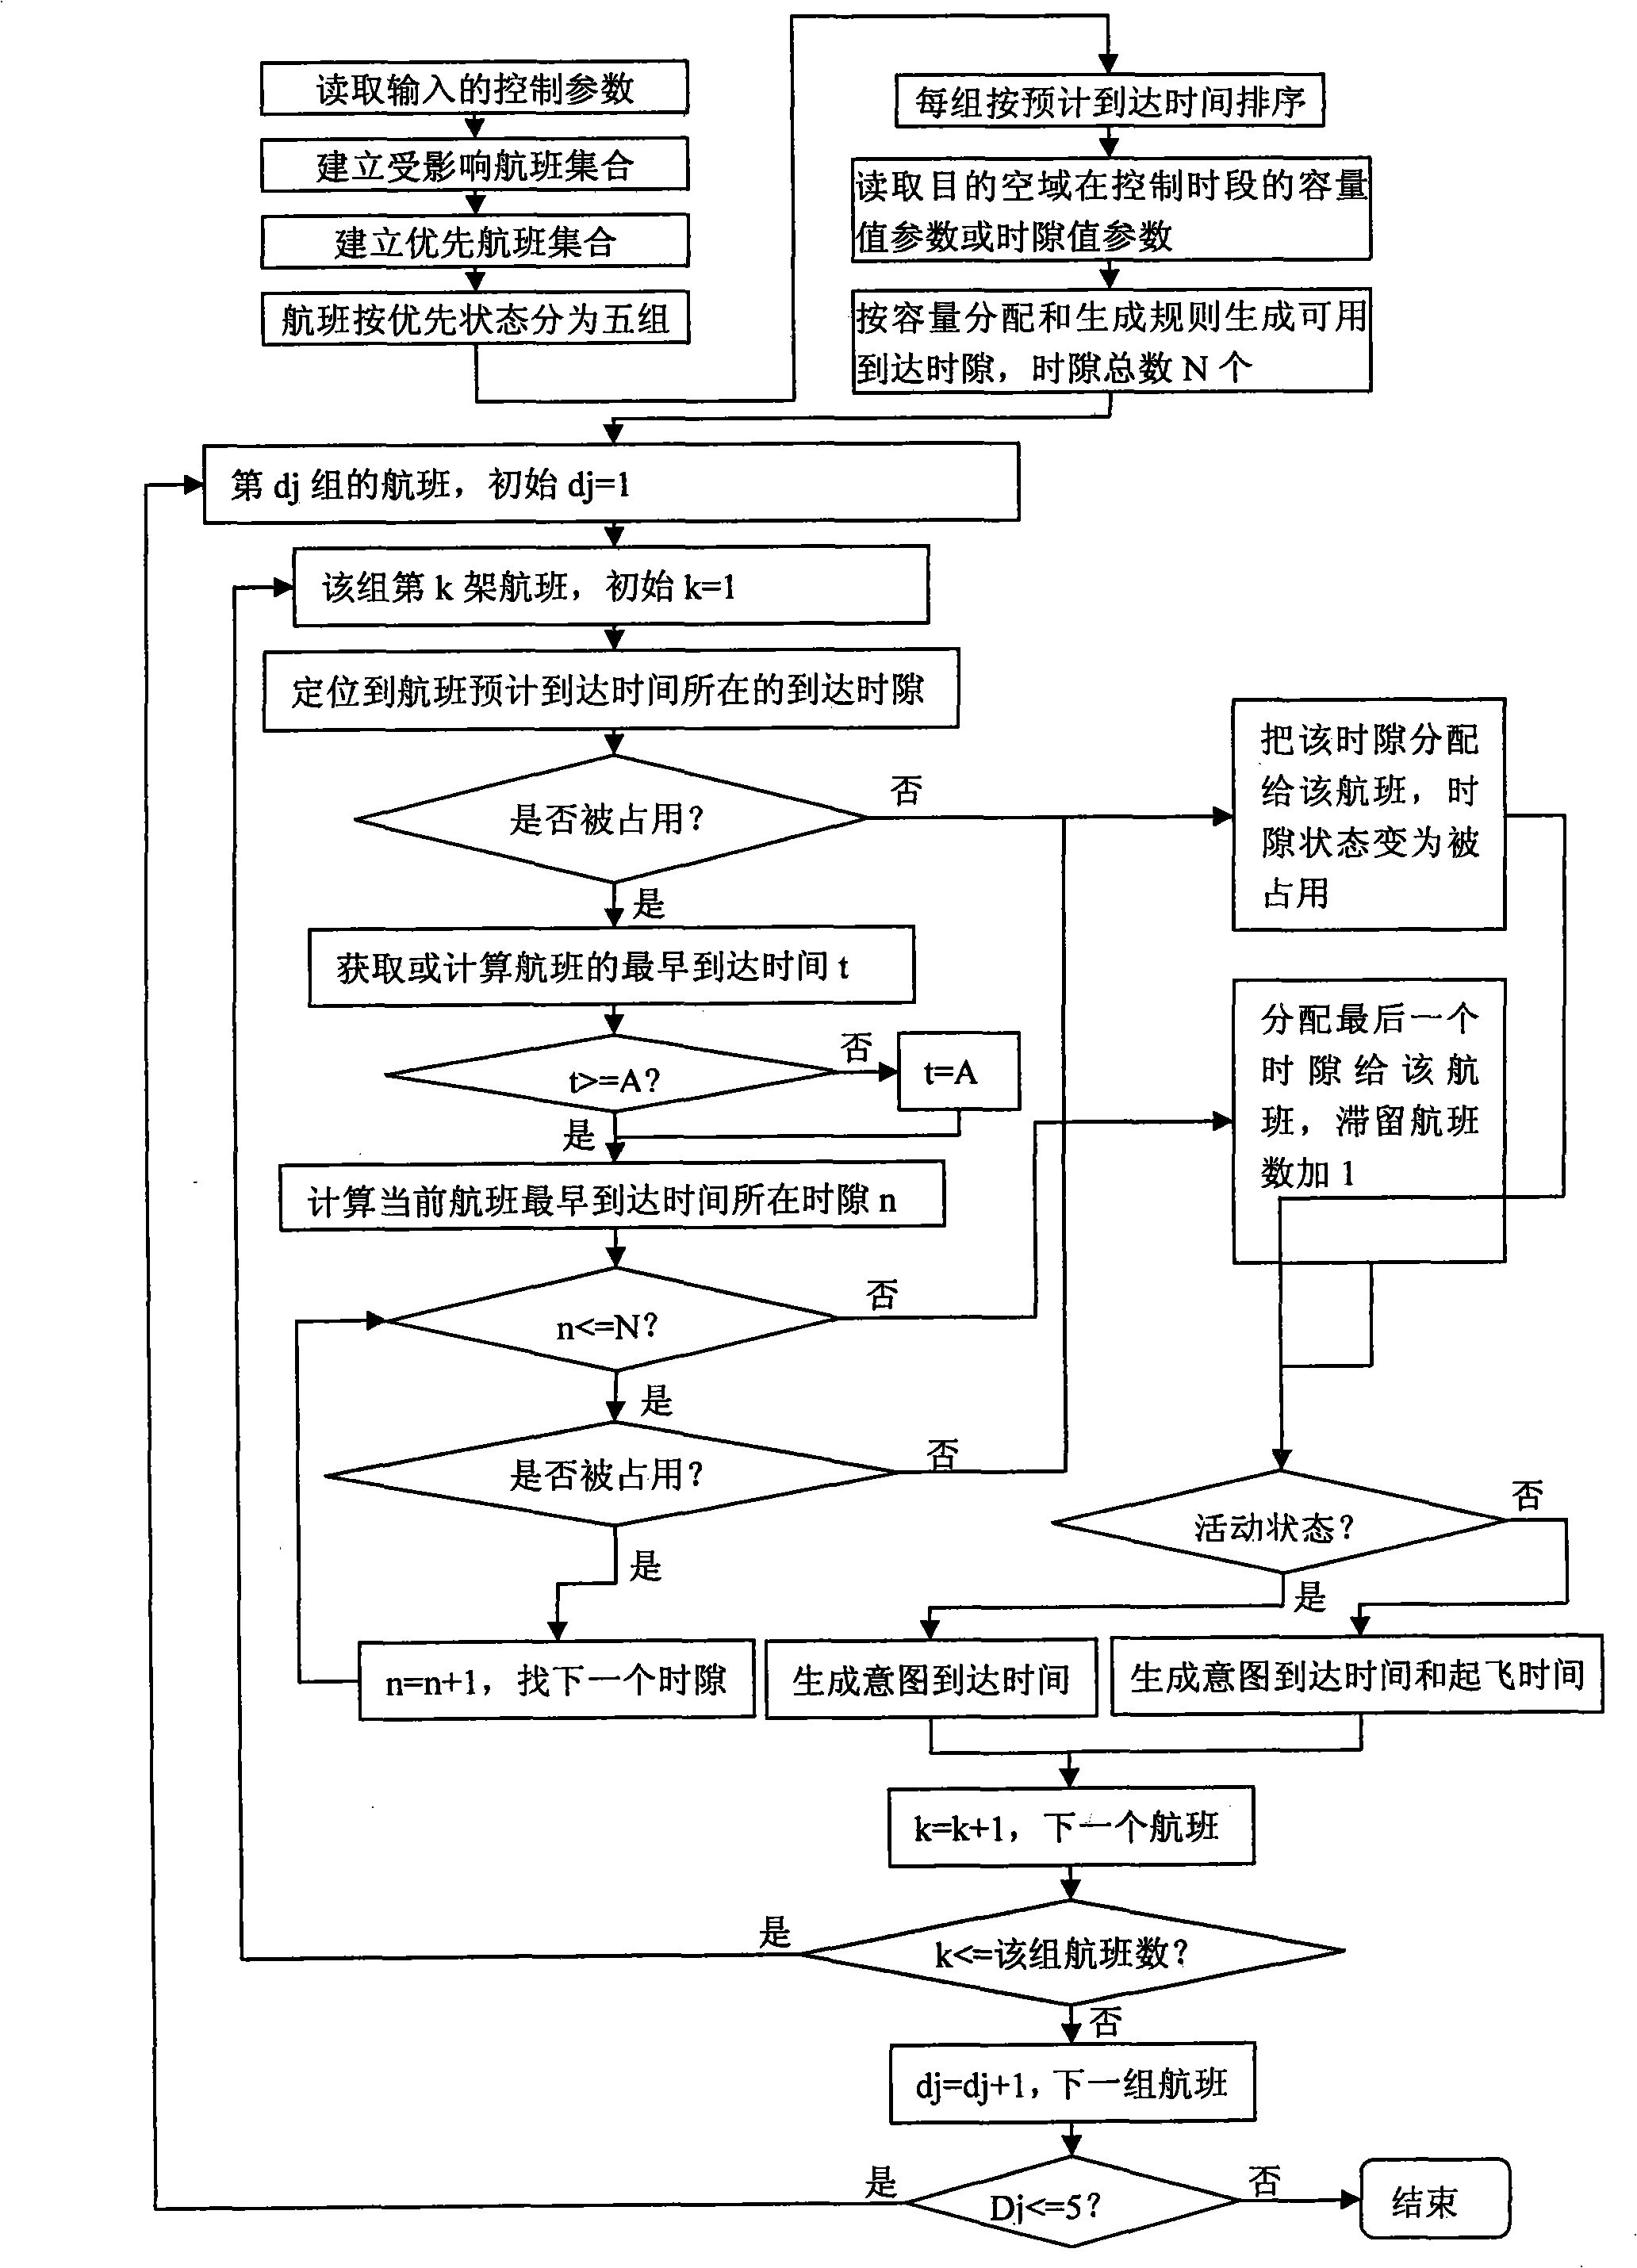 Method for implementing flight transmit interval